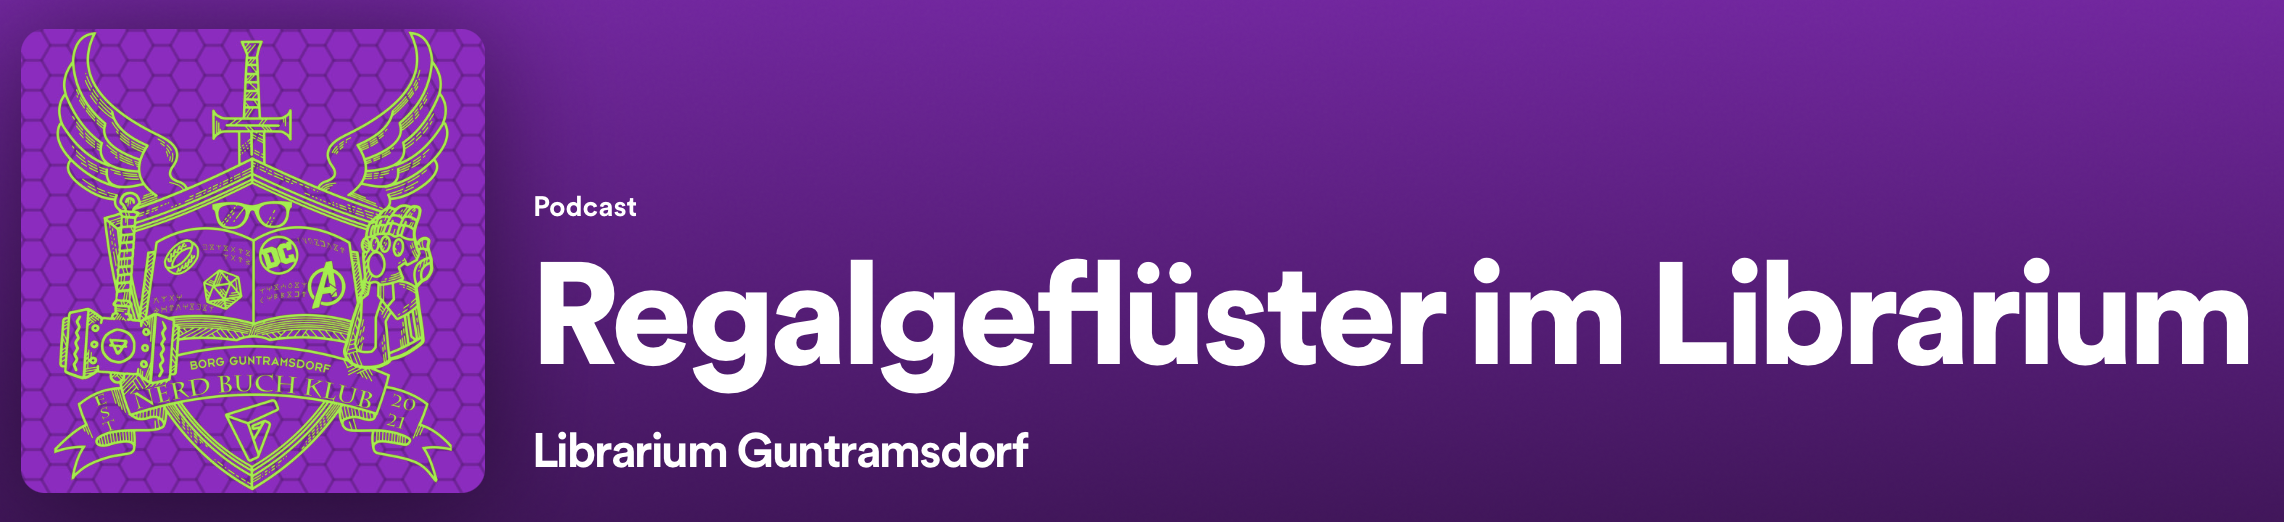 Podcast: Regalgeflüster im Librarium Guntramsdorf | BORG Guntramsdorf